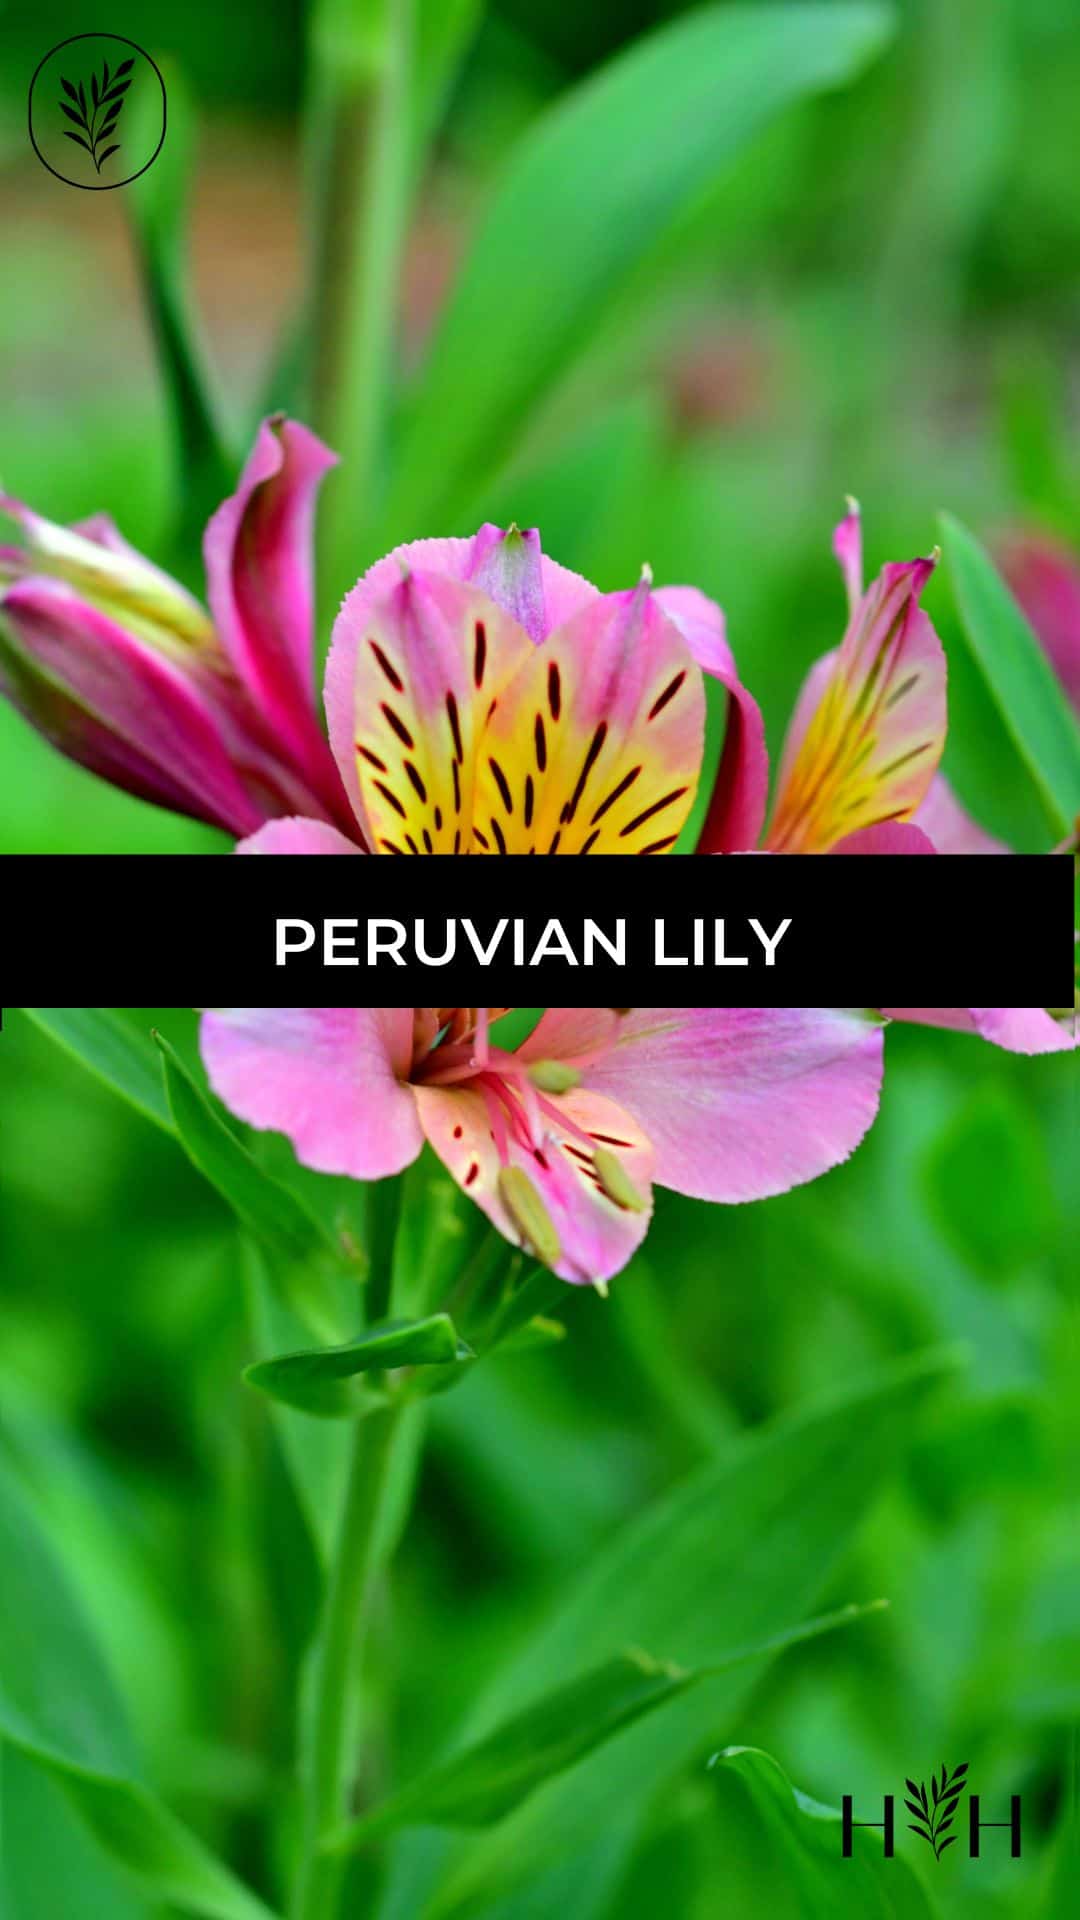 Peruvian lily via @home4theharvest